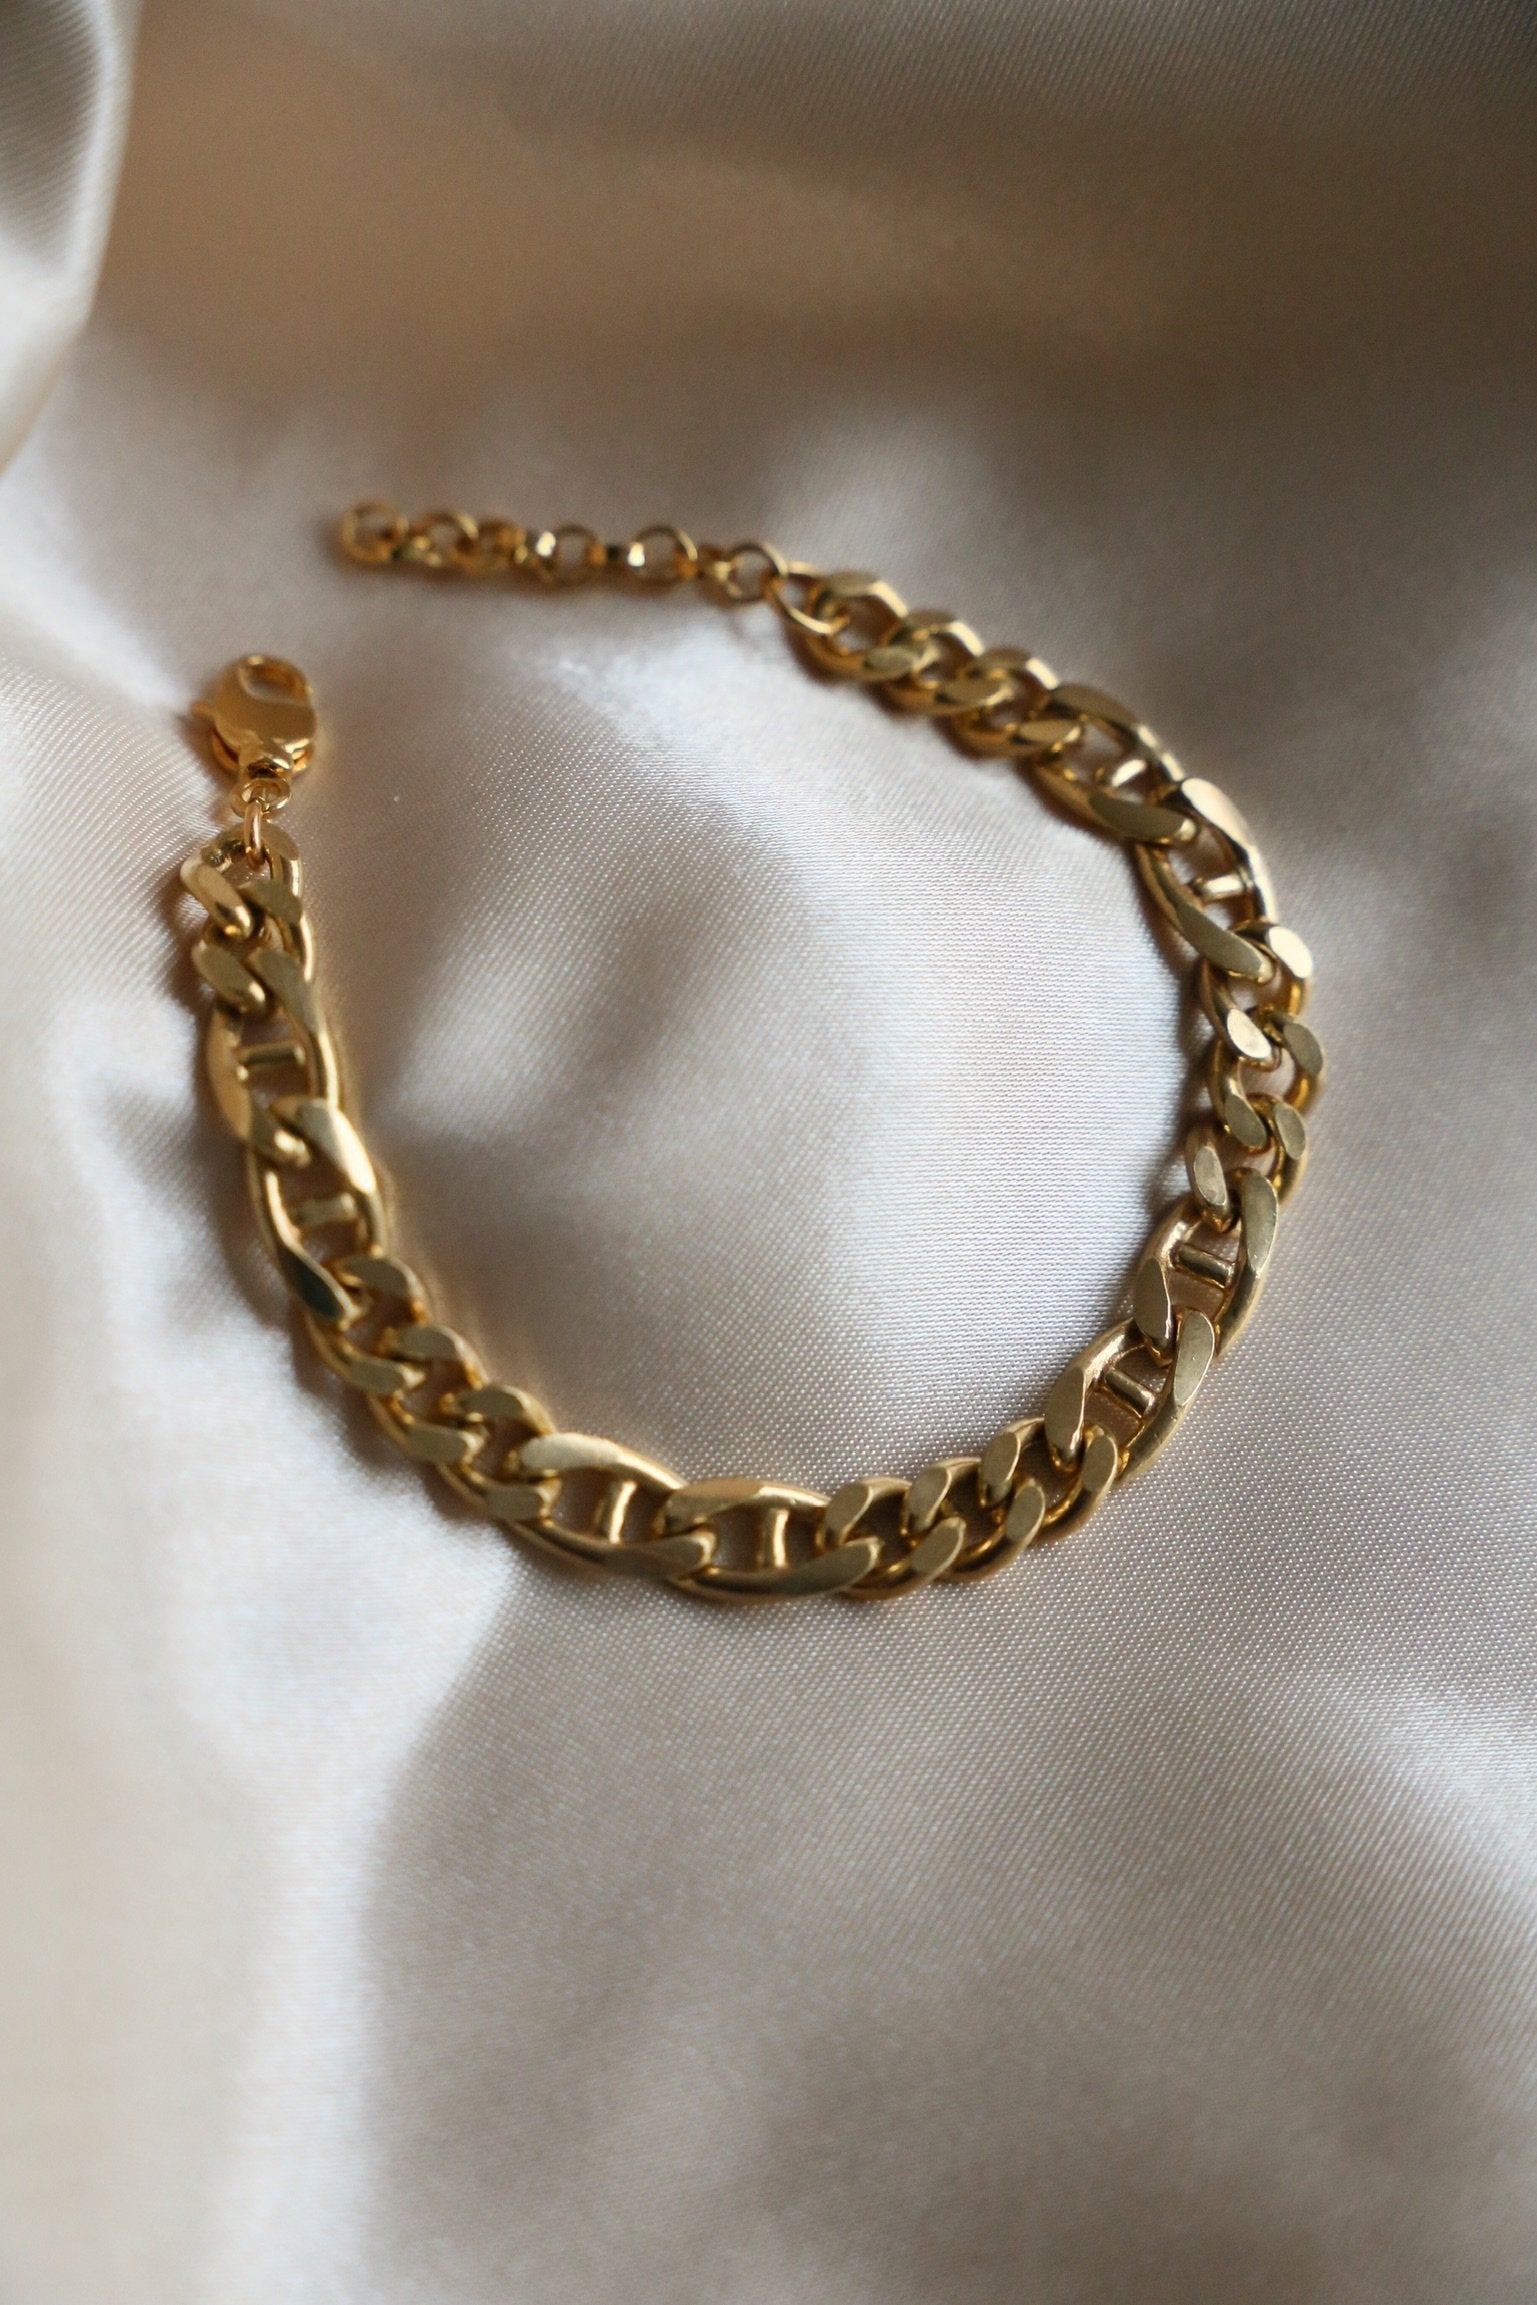 Noelle Vintage Chain bracelet - Boutique Minimaliste has waterproof, durable, elegant and vintage inspired jewelry